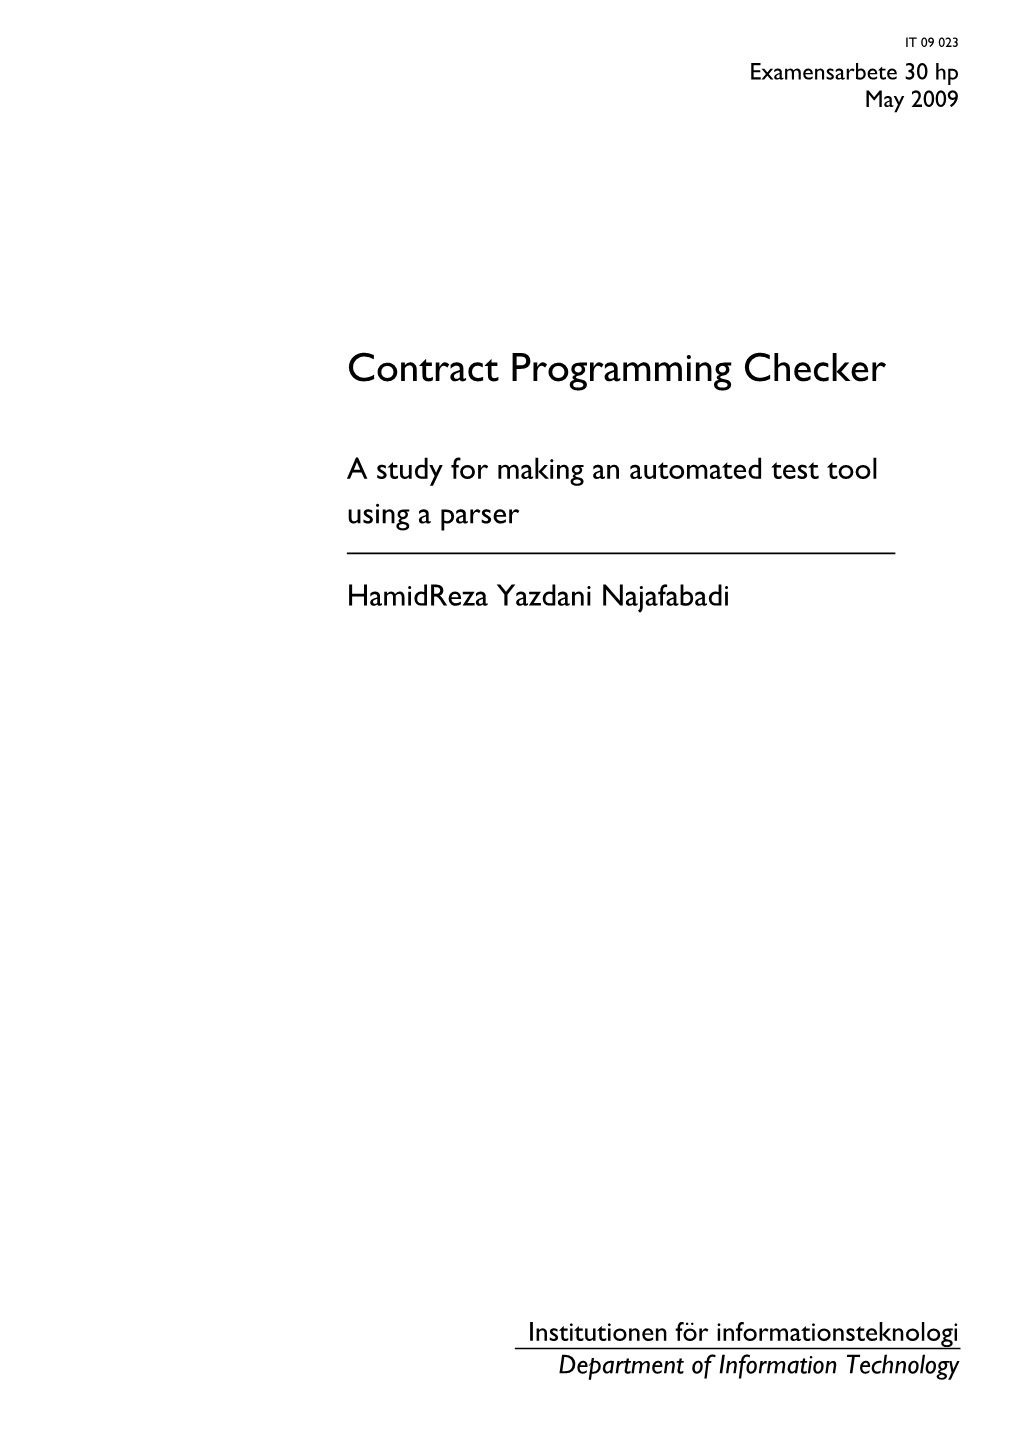 Contract Programming Checker